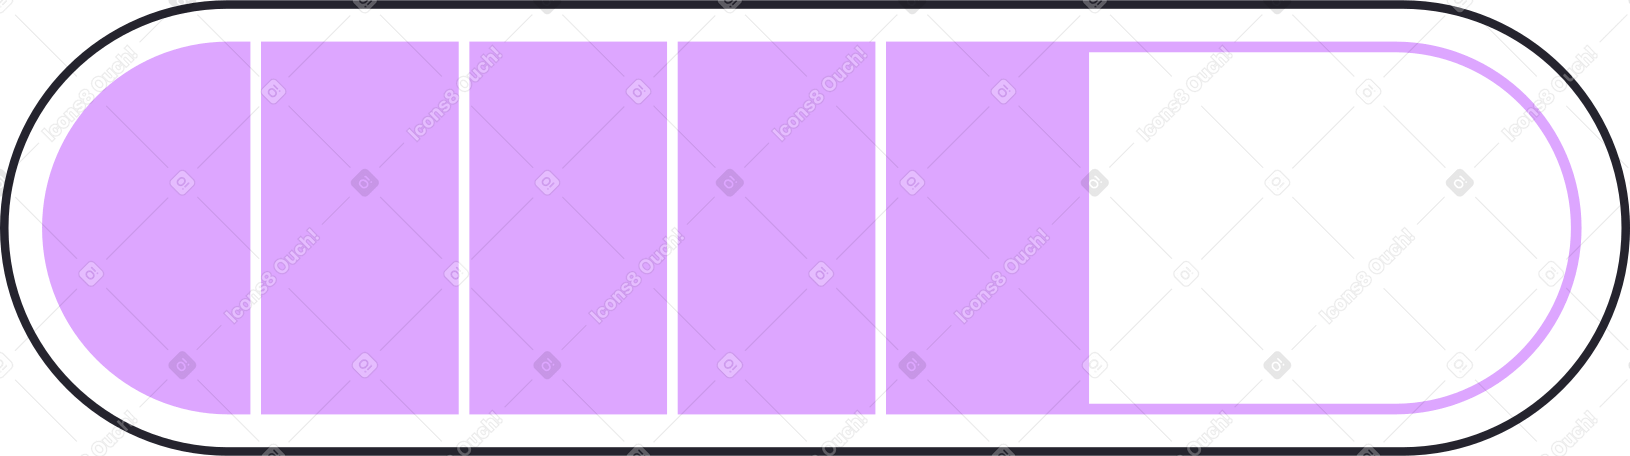 light purple rounded progress bar Illustration in PNG, SVG